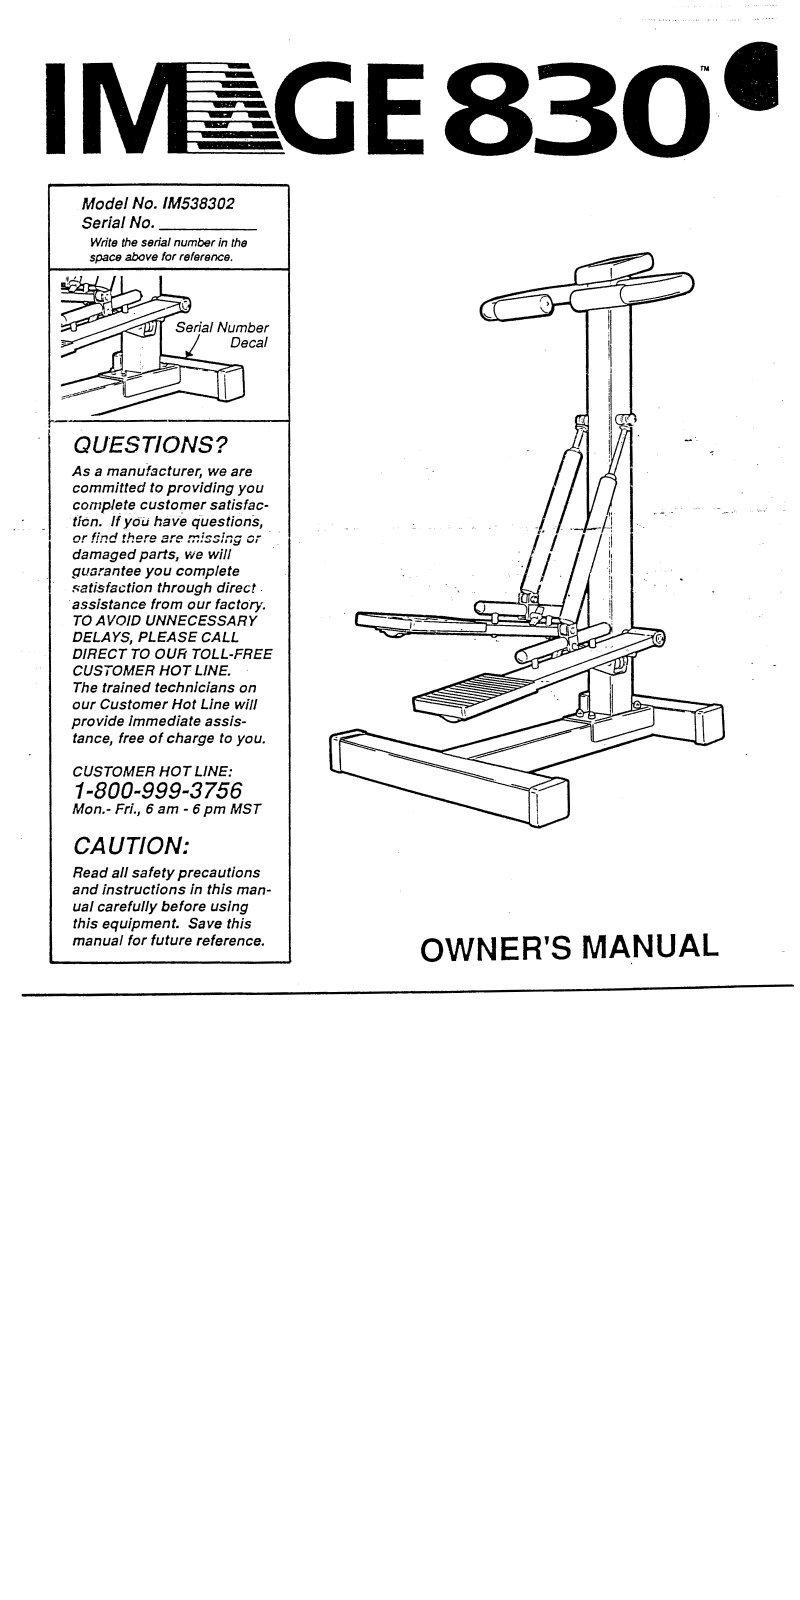 Image IM538302 Owner's Manual